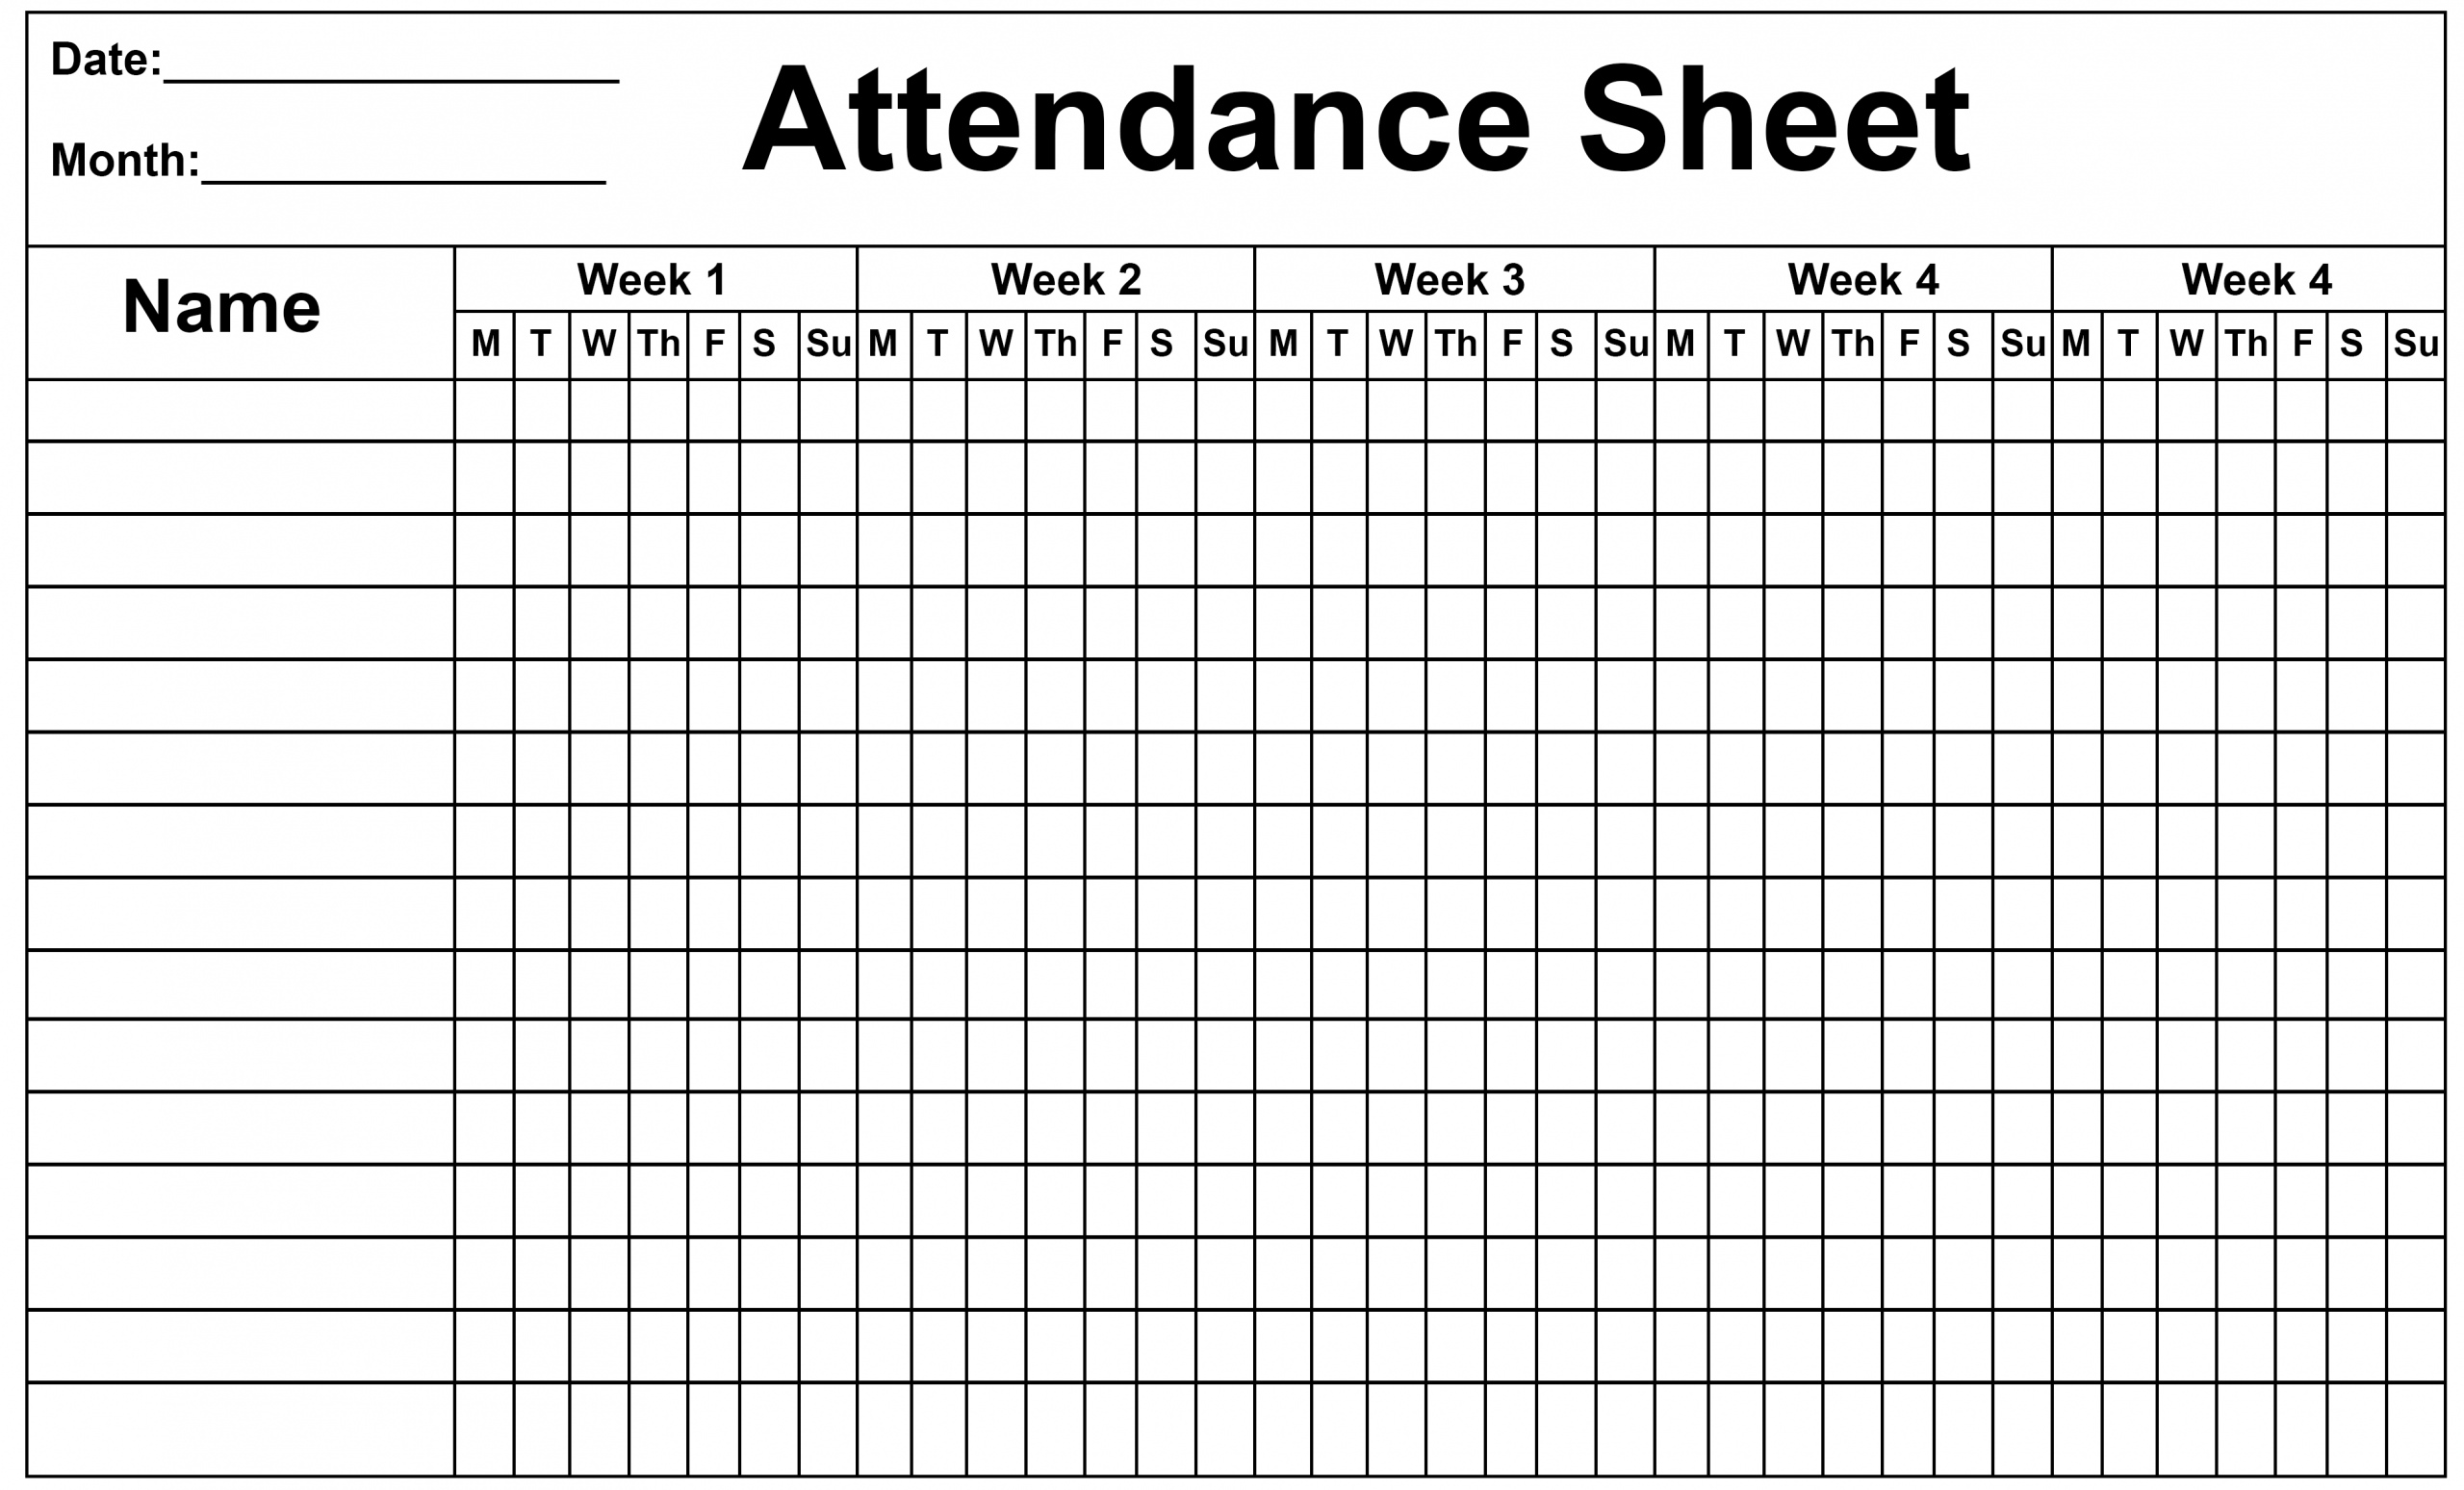 Employee Attendance Tracker Sheet 2019  Printable Employee Attendance Calendar Template